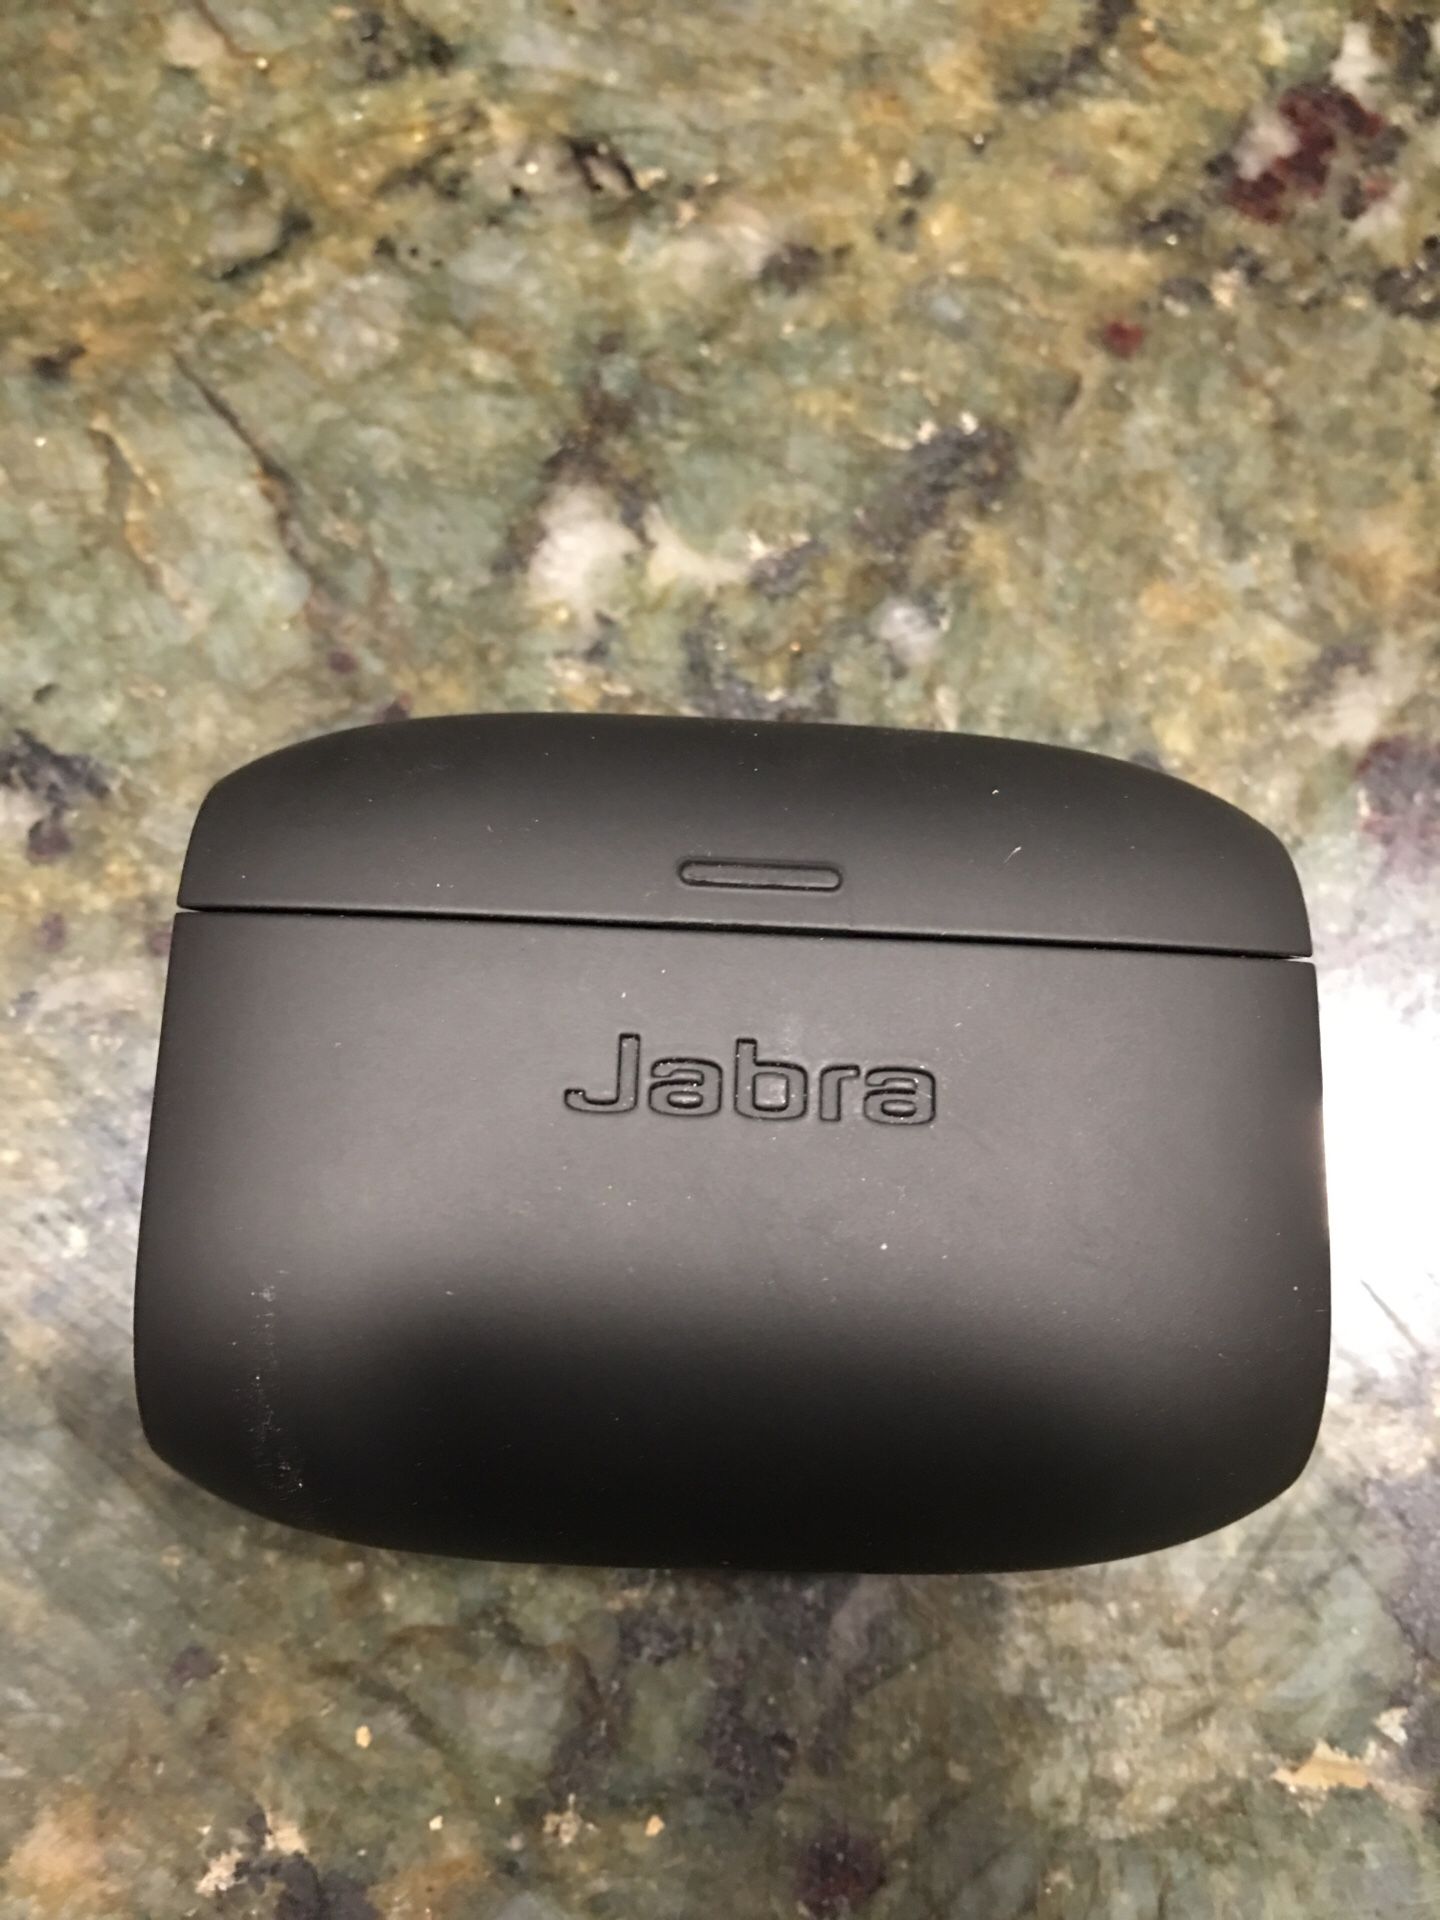 Jabra Elite 65t Active True Wireless Earbuds